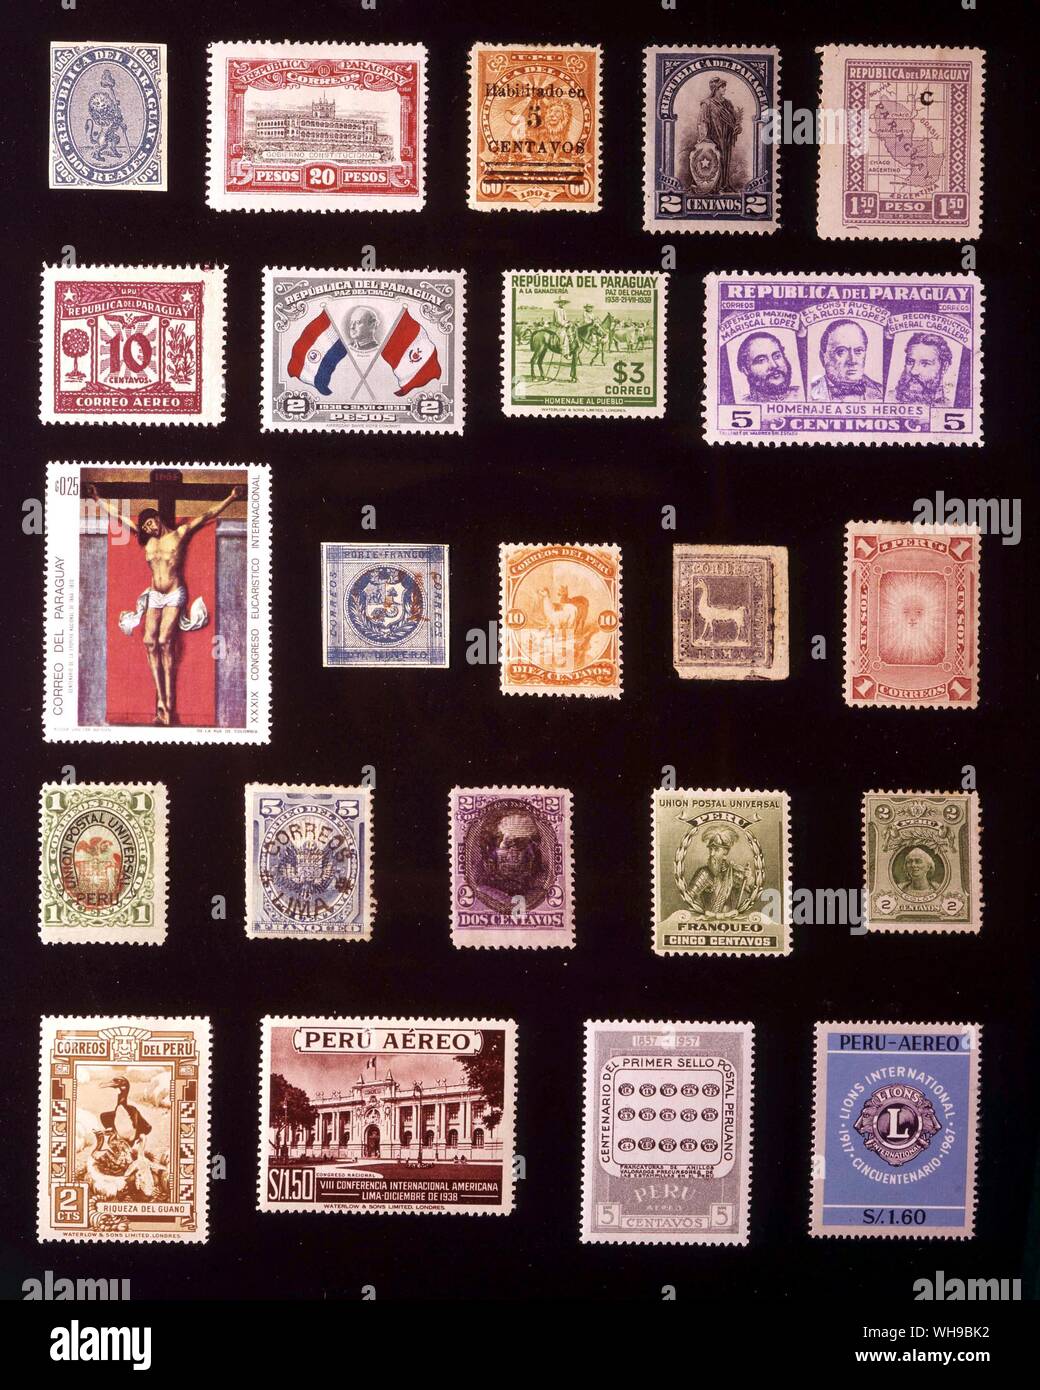 AMERICA - in Paraguay e in Perù: (da sinistra a destra) 1. Il Paraguay, 2 reales, 1870, 2. Il Paraguay, 20 pesos, 1905, 3. Il Paraguay, 5 centavos, 1908, 4. Paraguey, 2 centavos, 1911, 5. Il Paraguay, 1,50 pesos, 1927, 6. Il Paraguay, 10 centavos, 1933, 7. Il Paraguay, 2 pesos, 1939, 8. Il Paraguay, 3 pesos, 1940, 9. Il Paraguay, 5 centimos, 1954, 10. Il Paraguay, 25 centavos, 1968, 11. Il Perù, 1 dinero, 1858, 12. Il Perù, 10 centavos, 1866 13. Il Perù, 2 centavos, 1873, 14. Il Perù, 1 sol, 1874, 15. Il Perù, 1 centavo, 1882, 16. Il Perù, 5 centavos, 1884, 17. Il Perù, 2 centavos, 1894, 18. Il Perù, 5 centavos, 1897, 19. Il Perù, 2 centavos, 1909, 20. Foto Stock